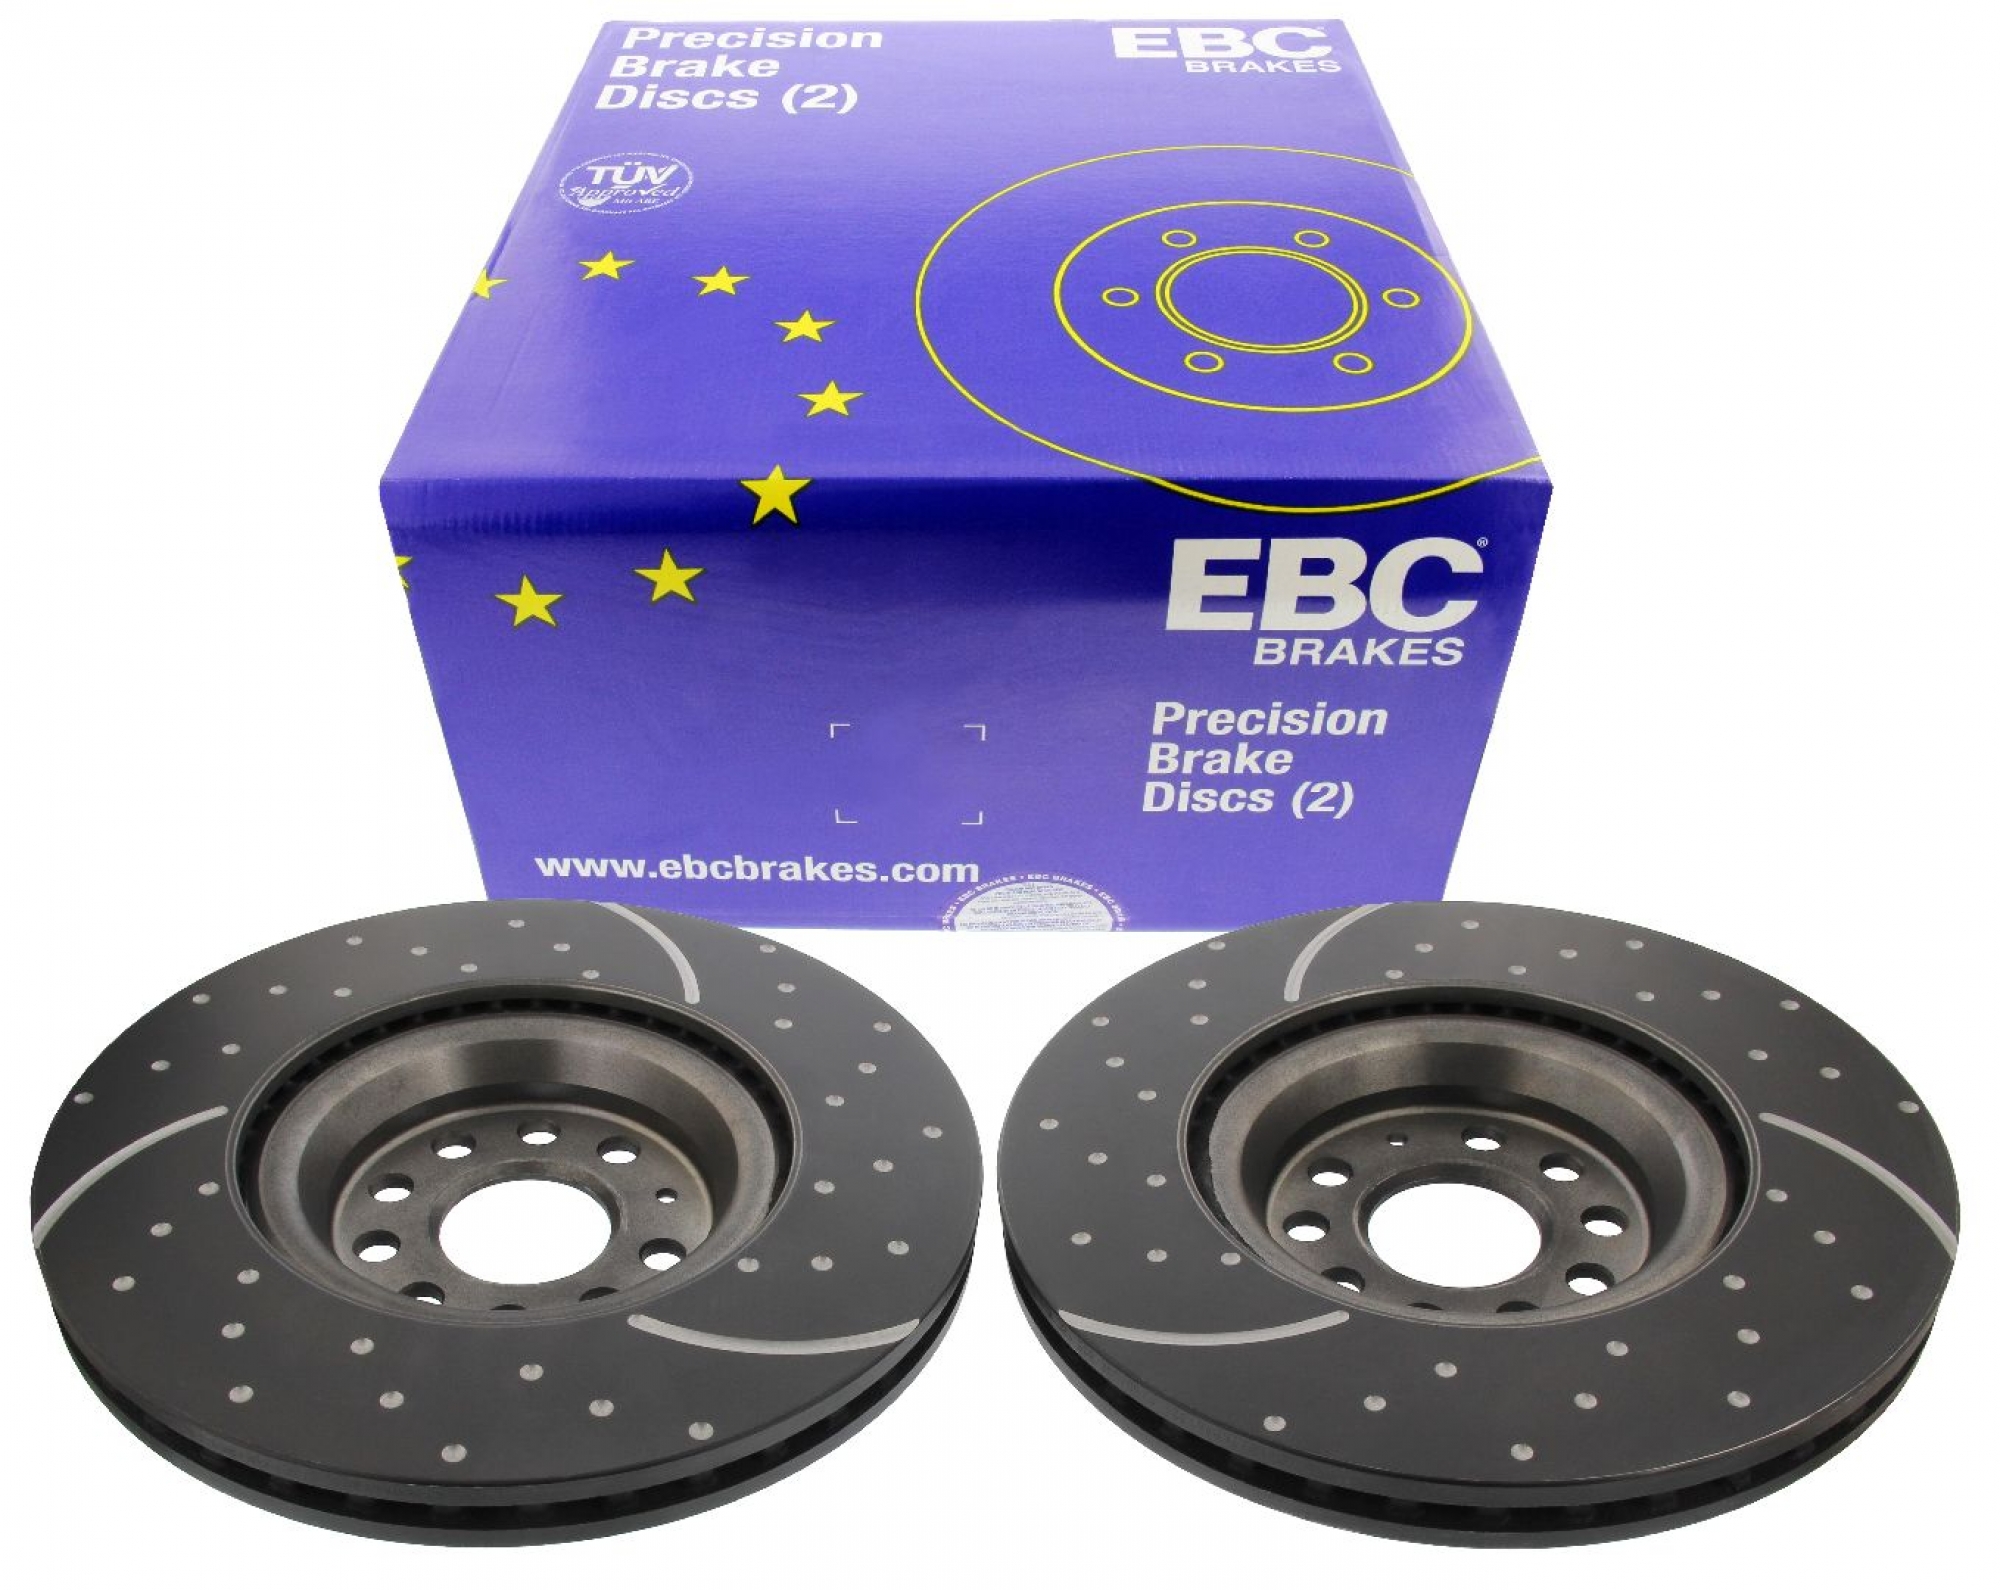 EBC-Bremsscheiben, Turbo Groove Disc Black (2-teilig), VA, Audi, Seat, Skoda, VW